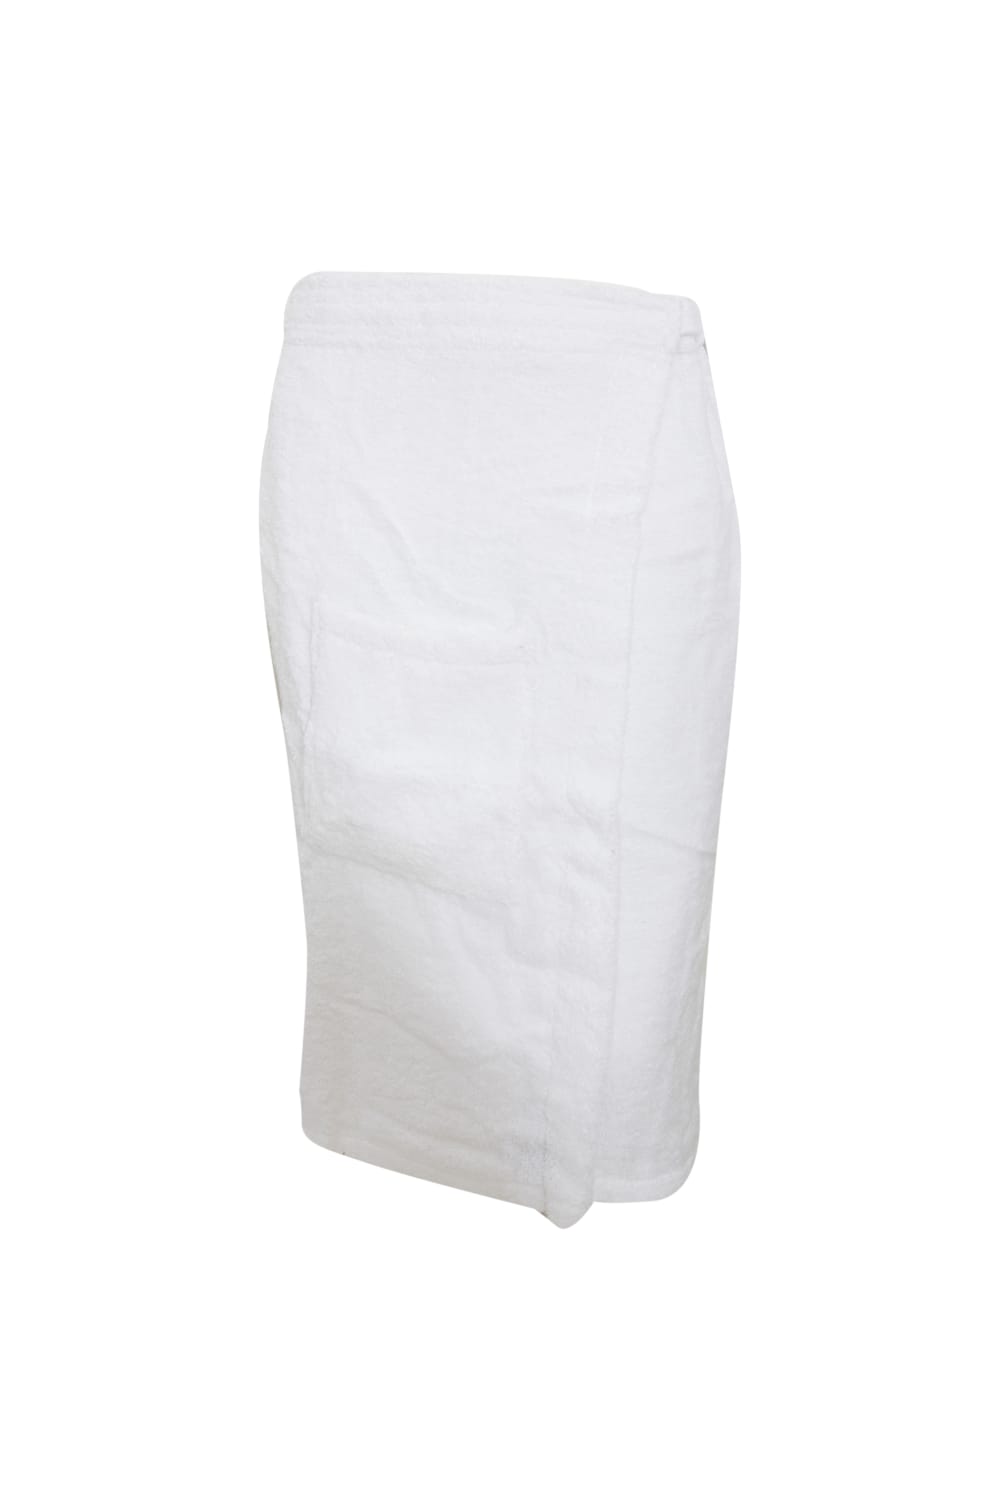 Towels By Jassz Sauna Towel (White) (S)